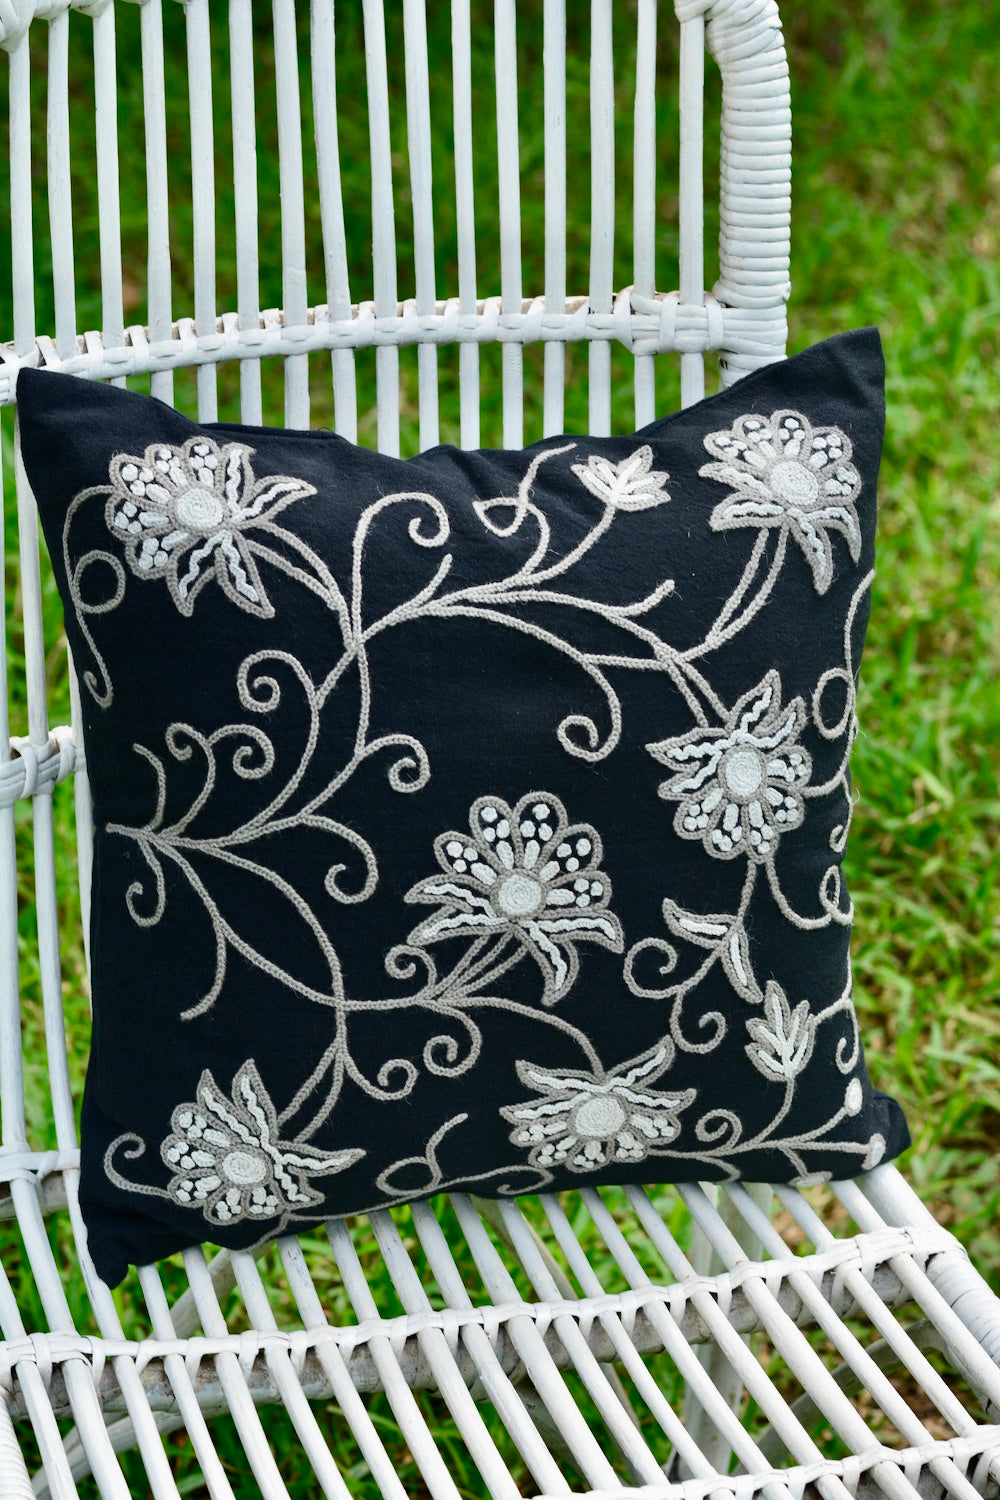 Kashmiri Embroidery Black Cushion Cover